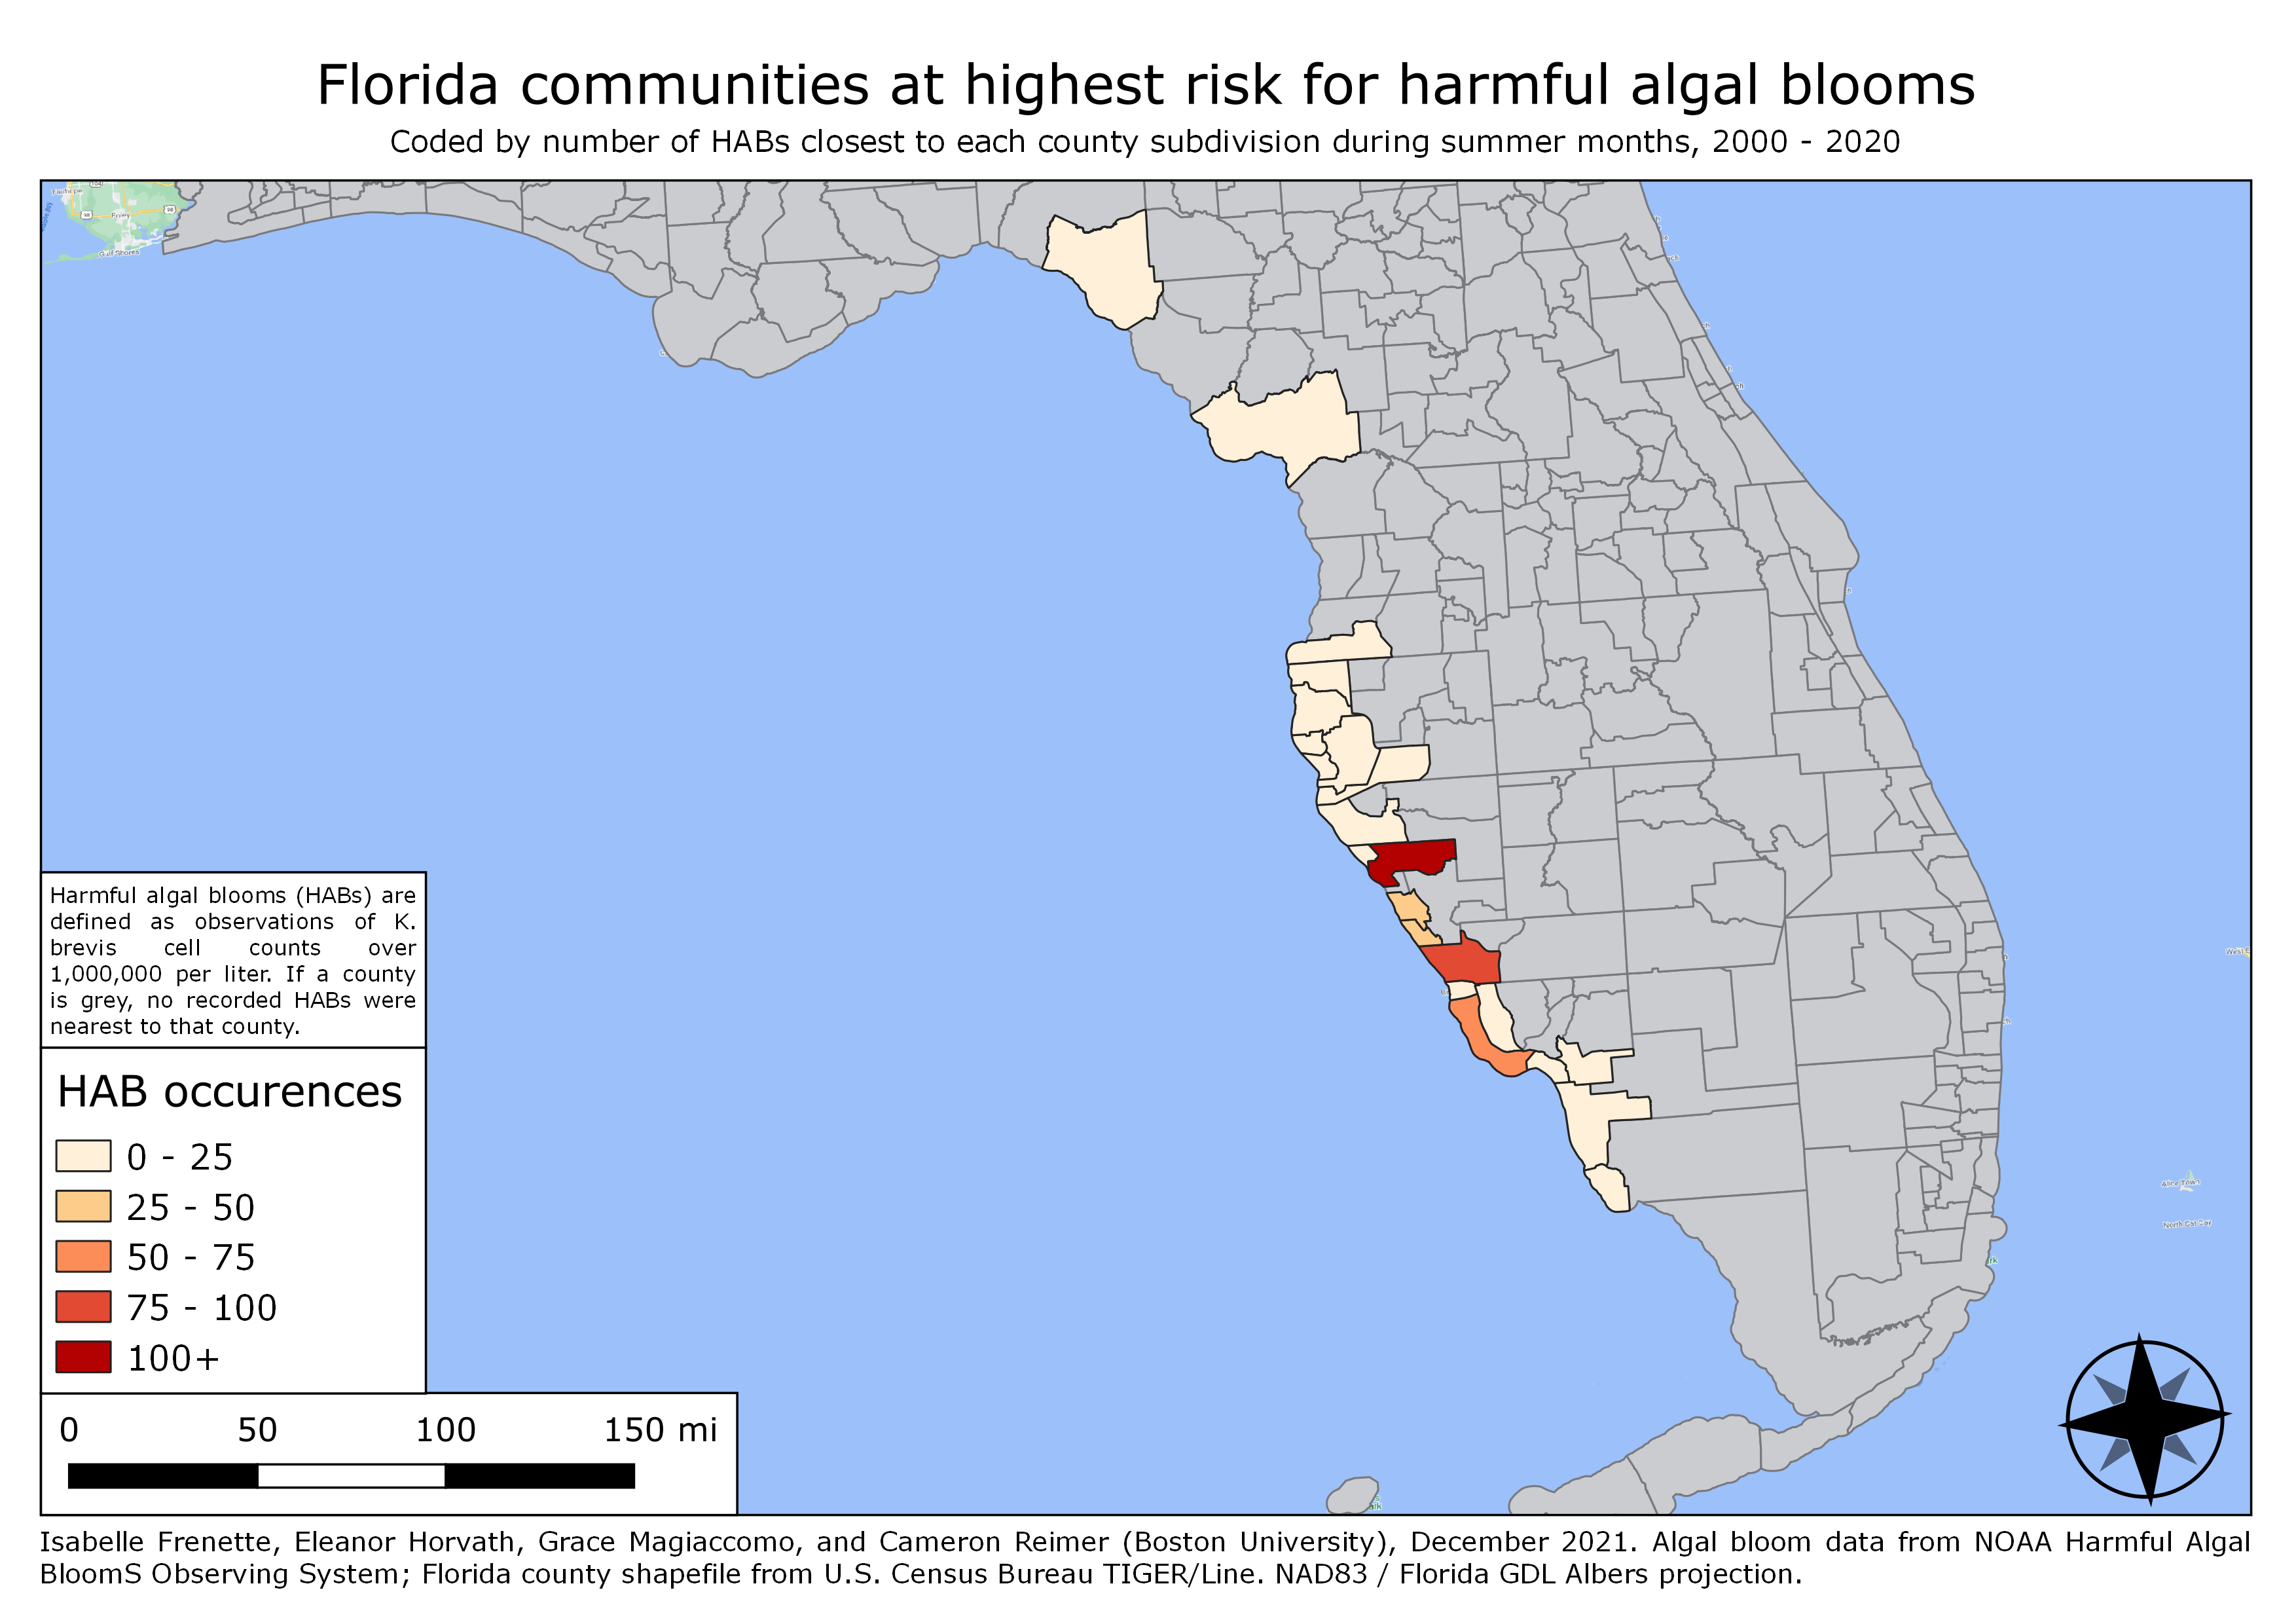 Ocean Constituents in Florida